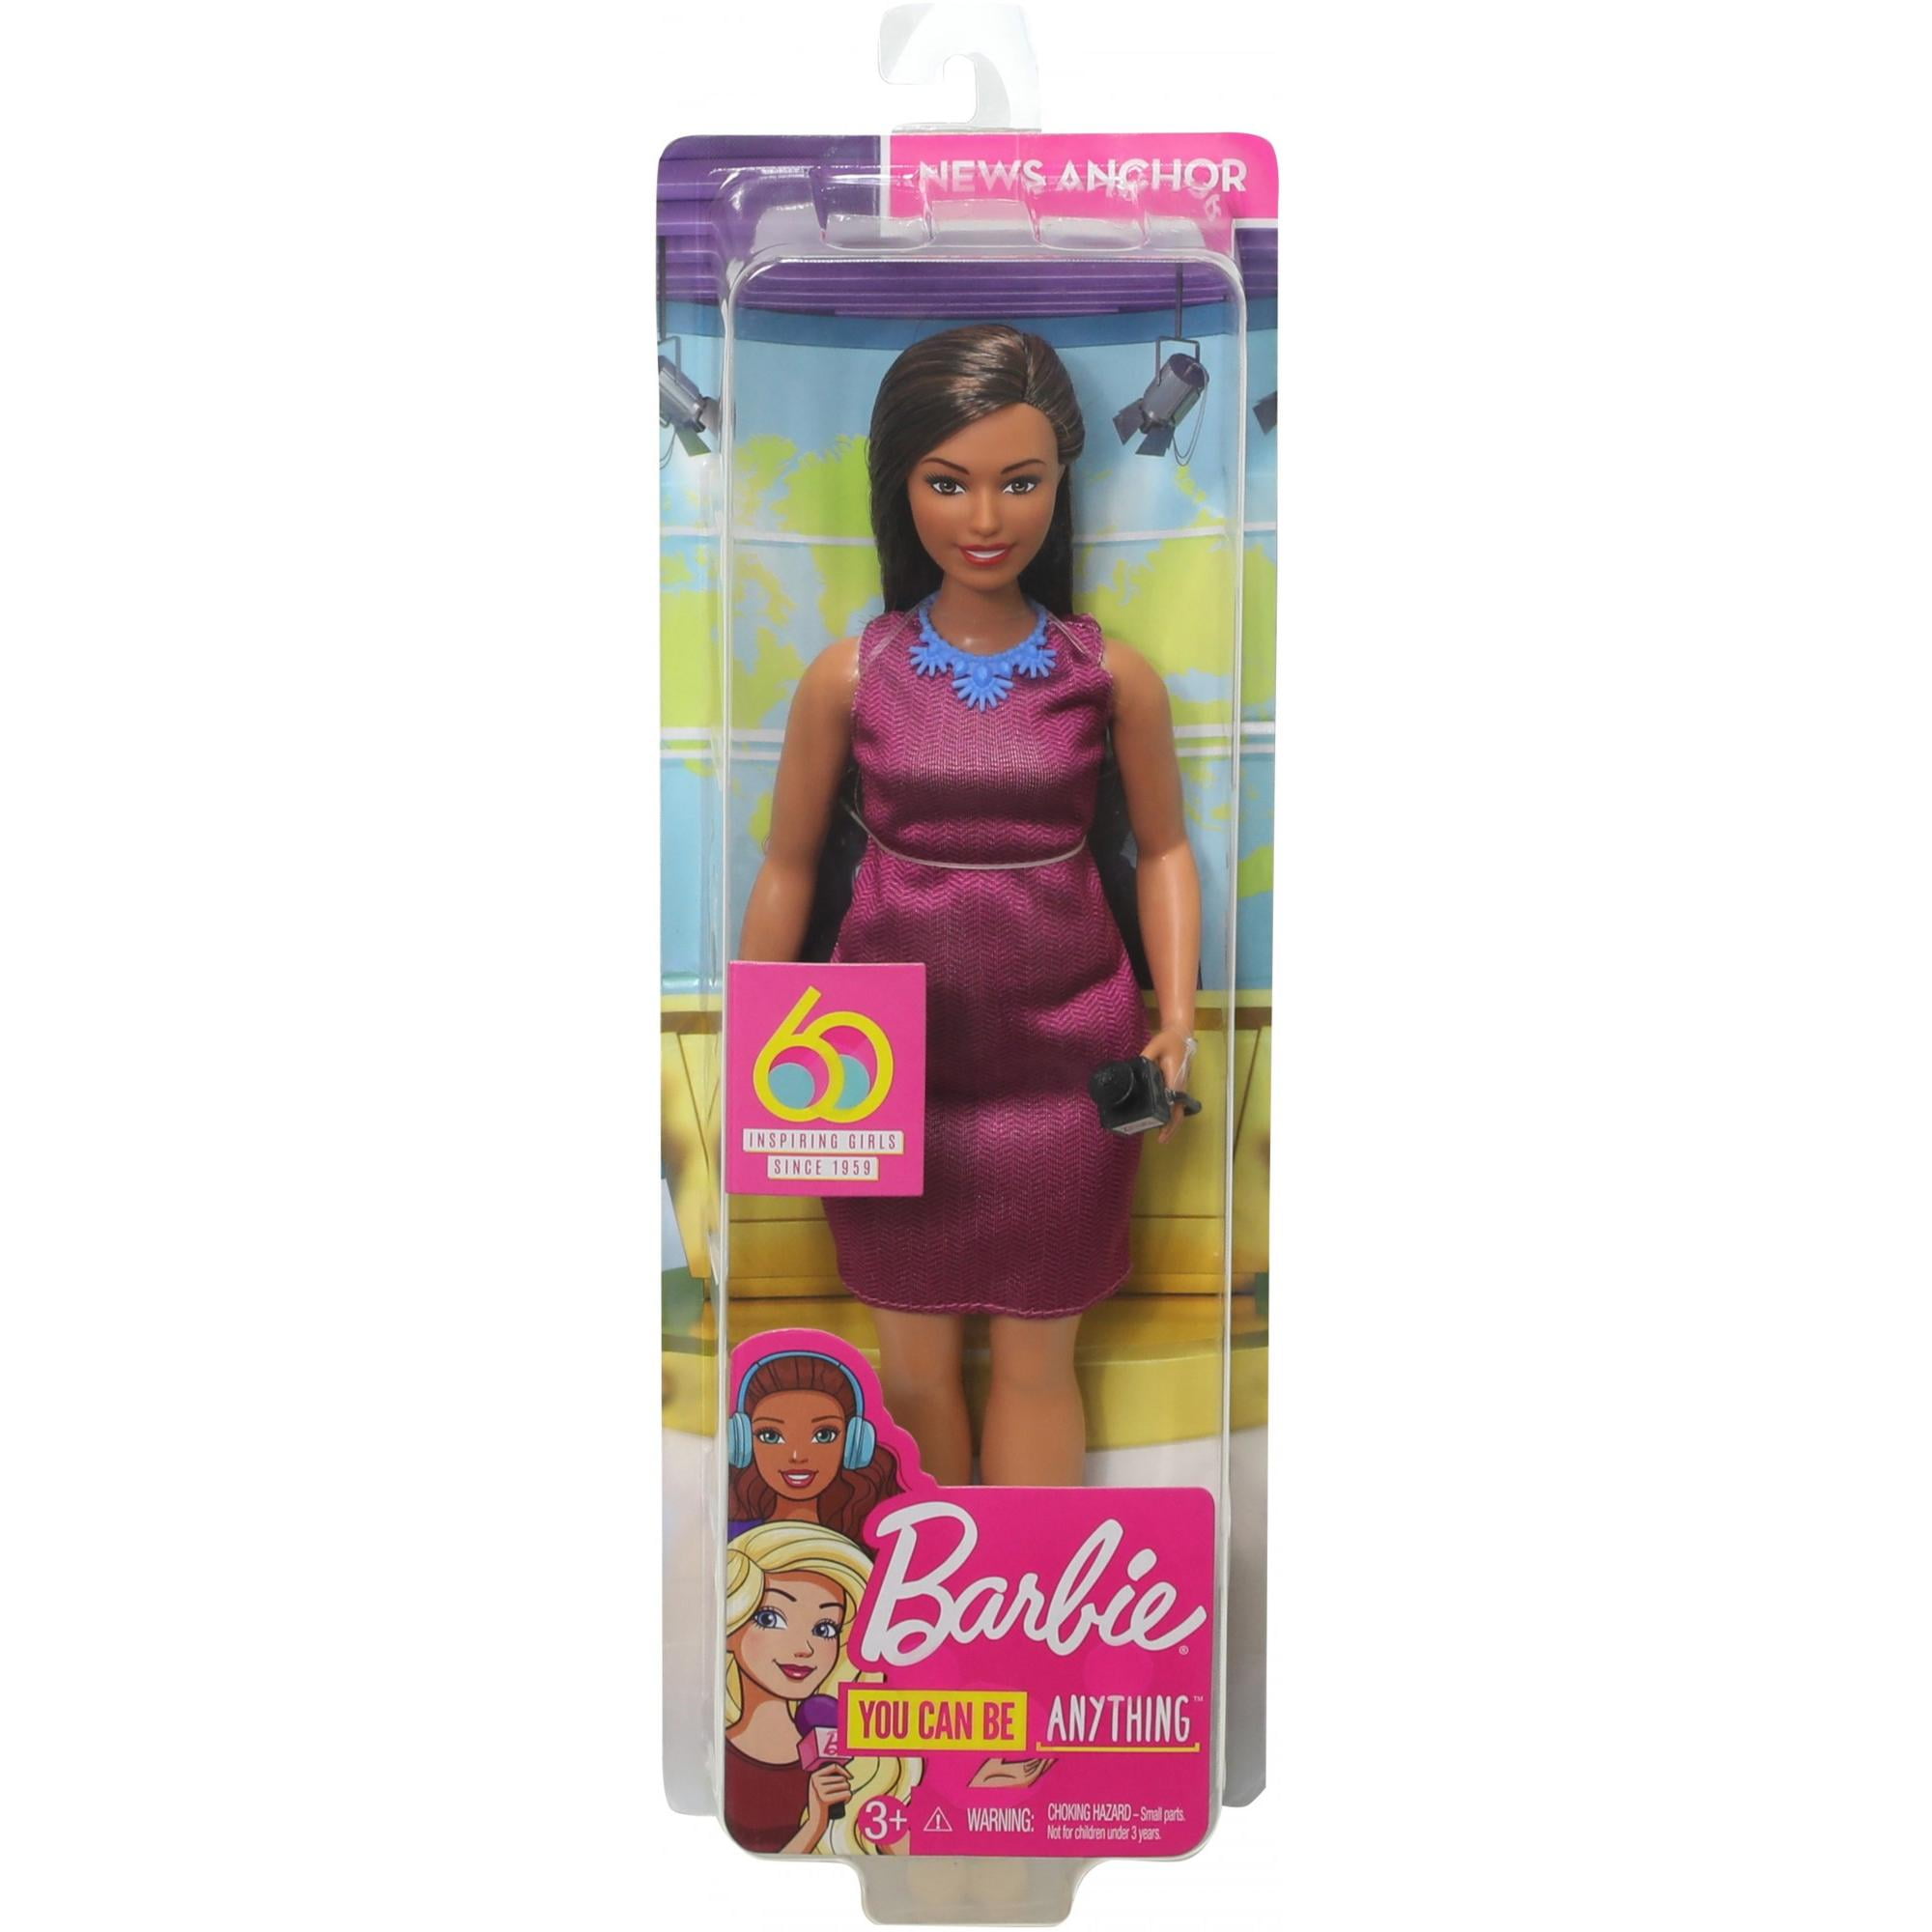 enz ethisch Geloofsbelijdenis Barbie 60th Anniversary Careers News Anchor Doll with Accessories -  Walmart.com